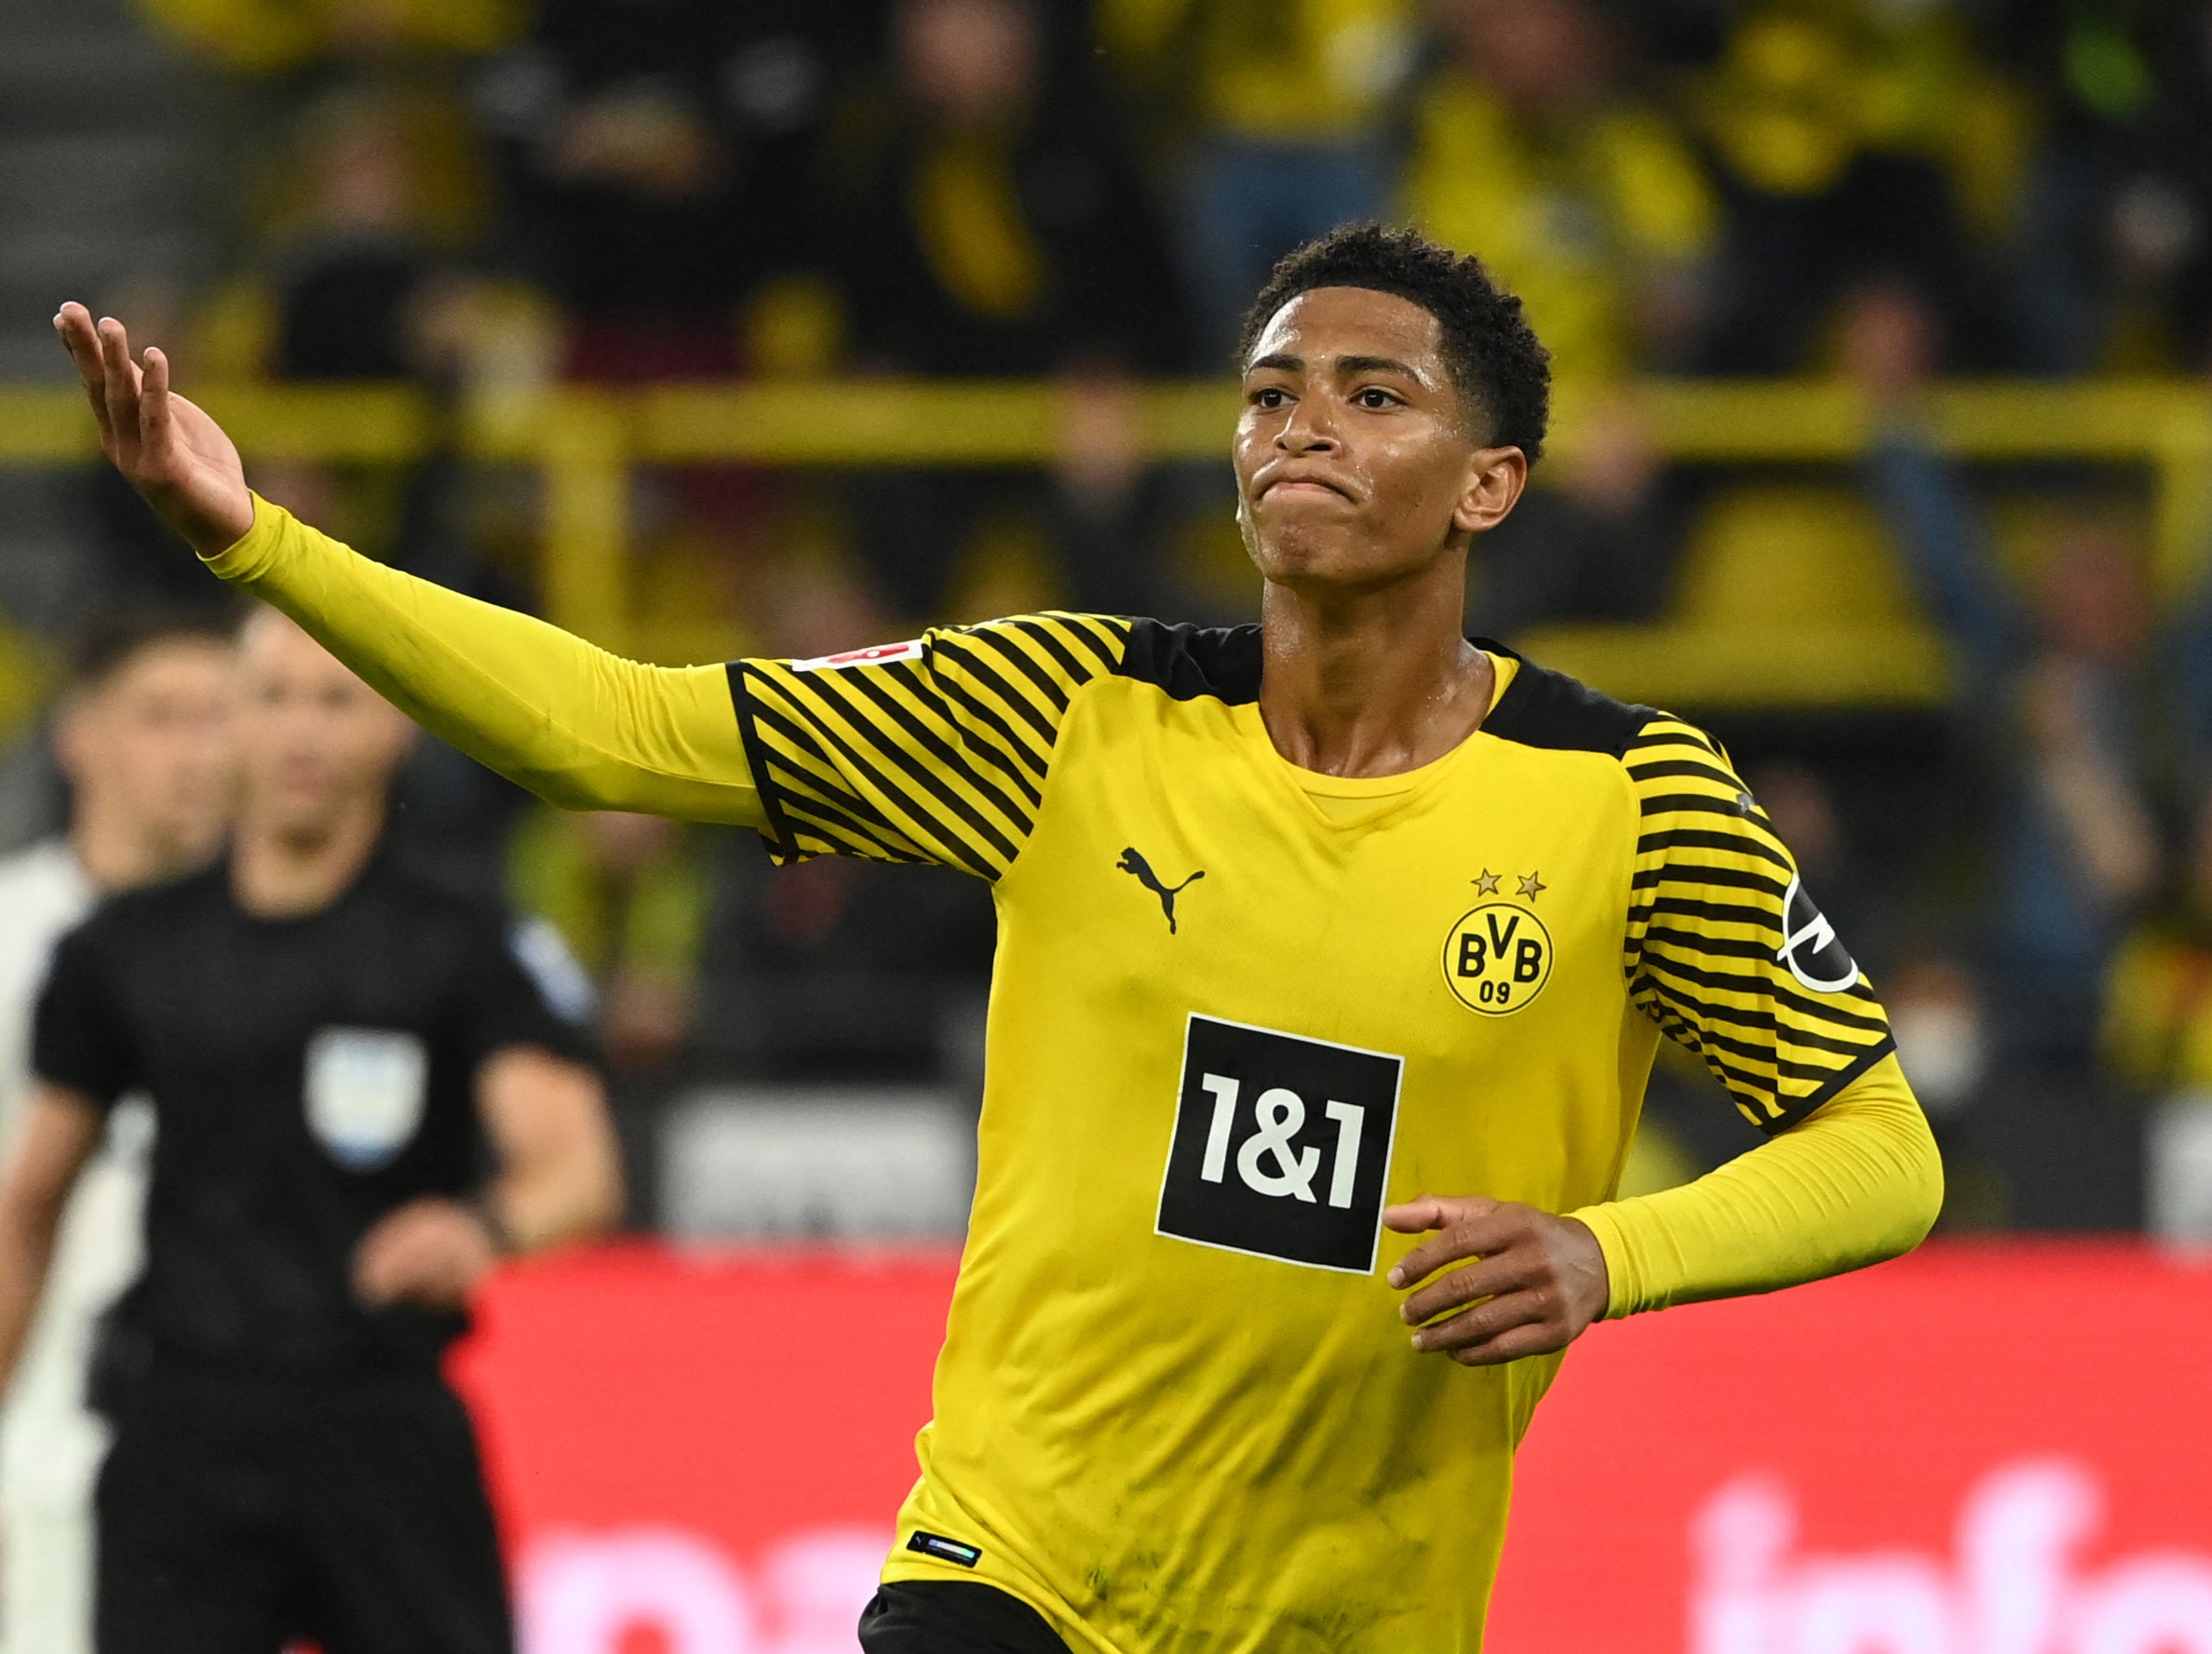 Borussia Dortmund teenager Jude Bellingham is enjoying a fine season.